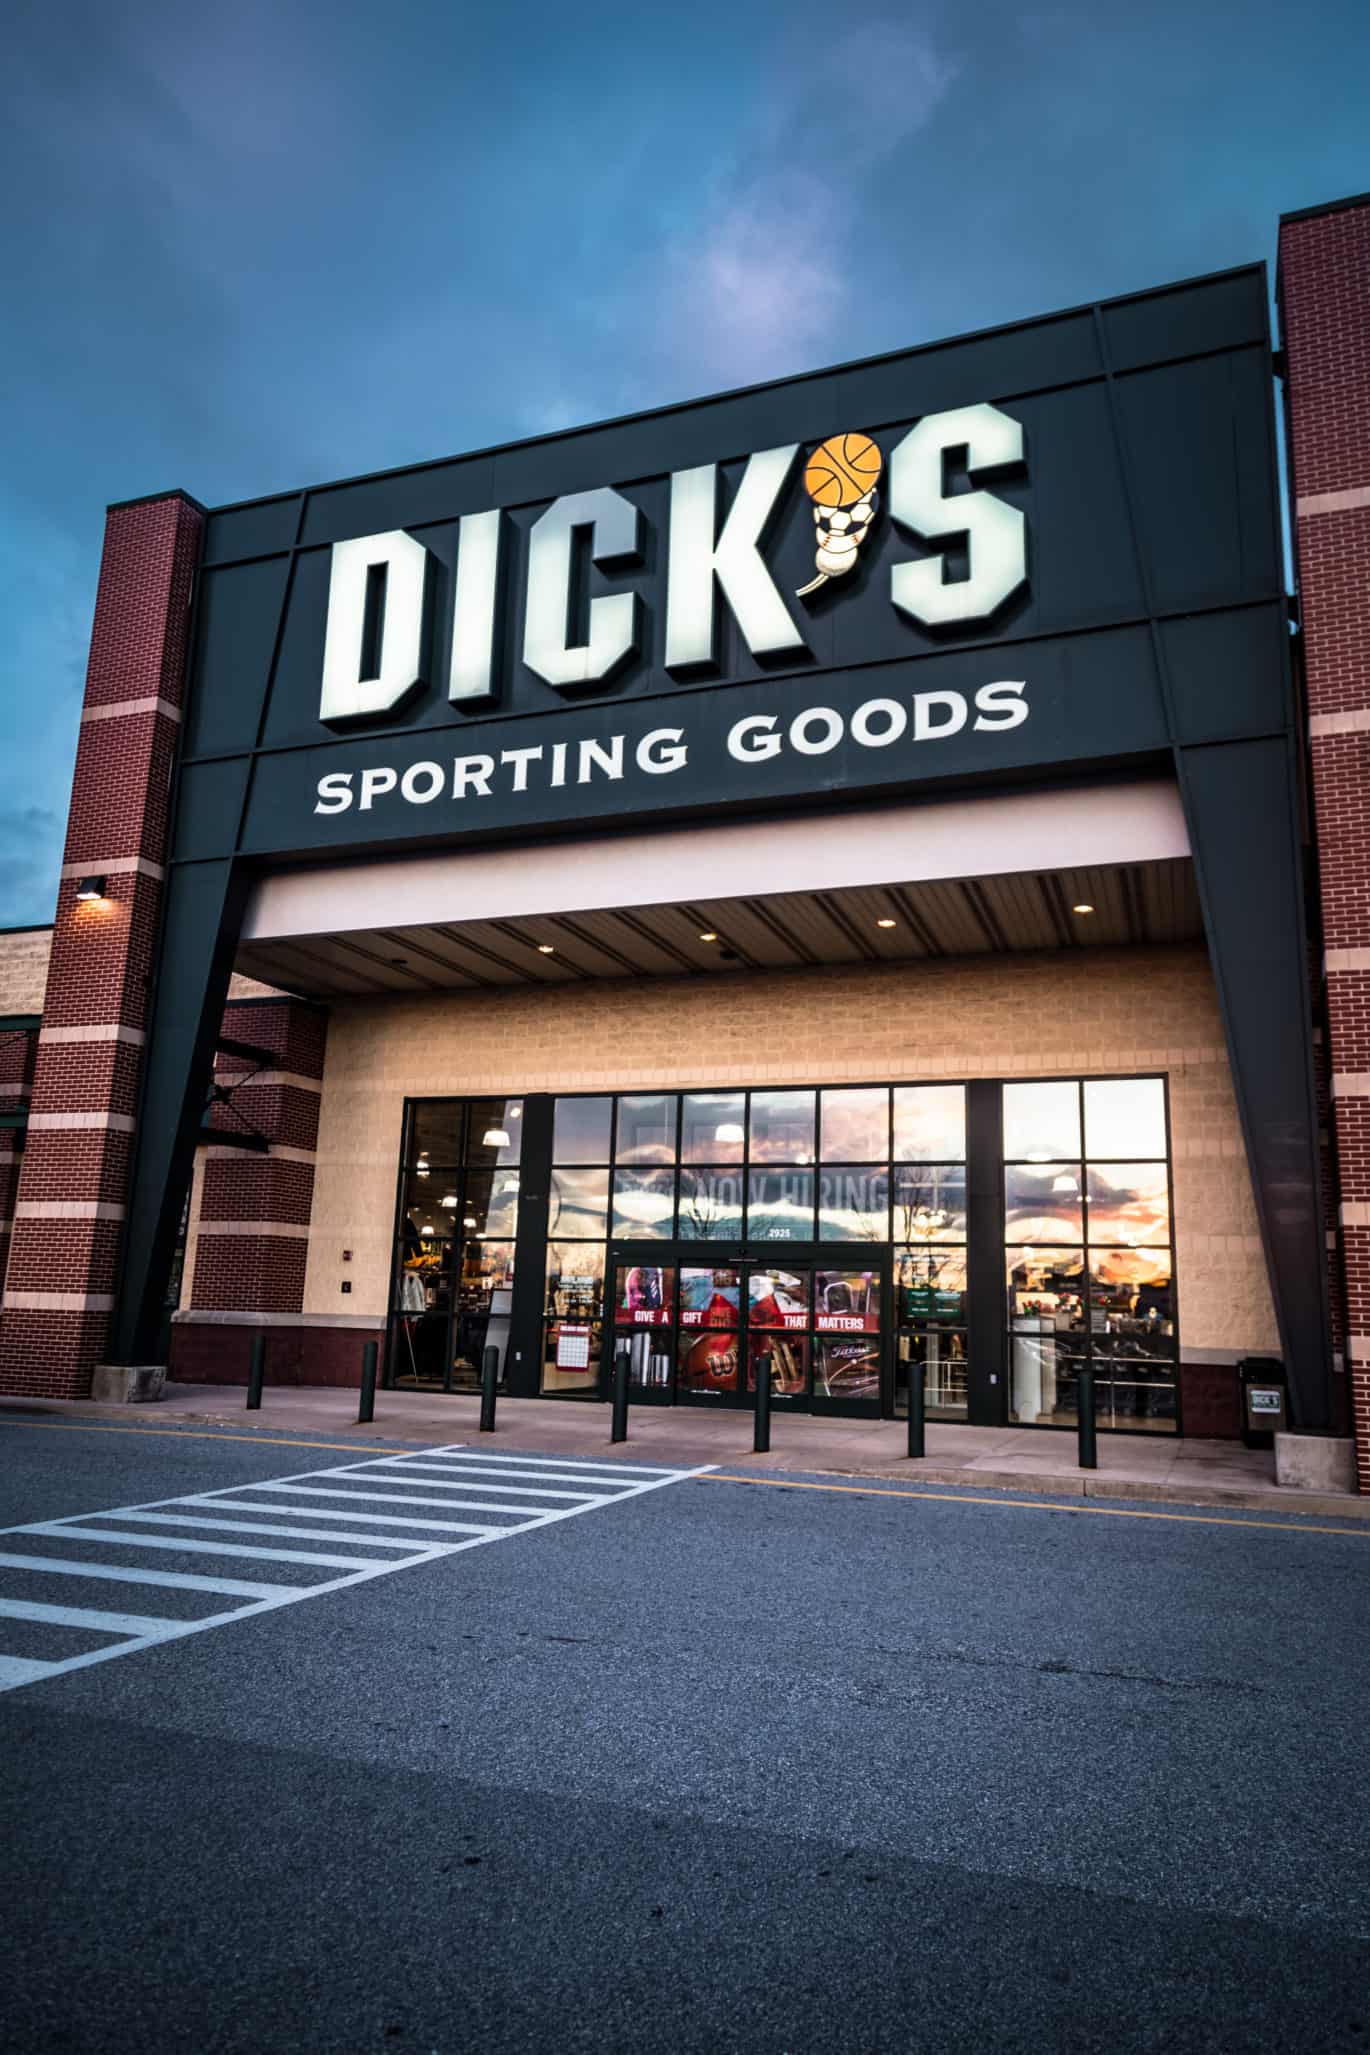 New dicks sporting goods commercial